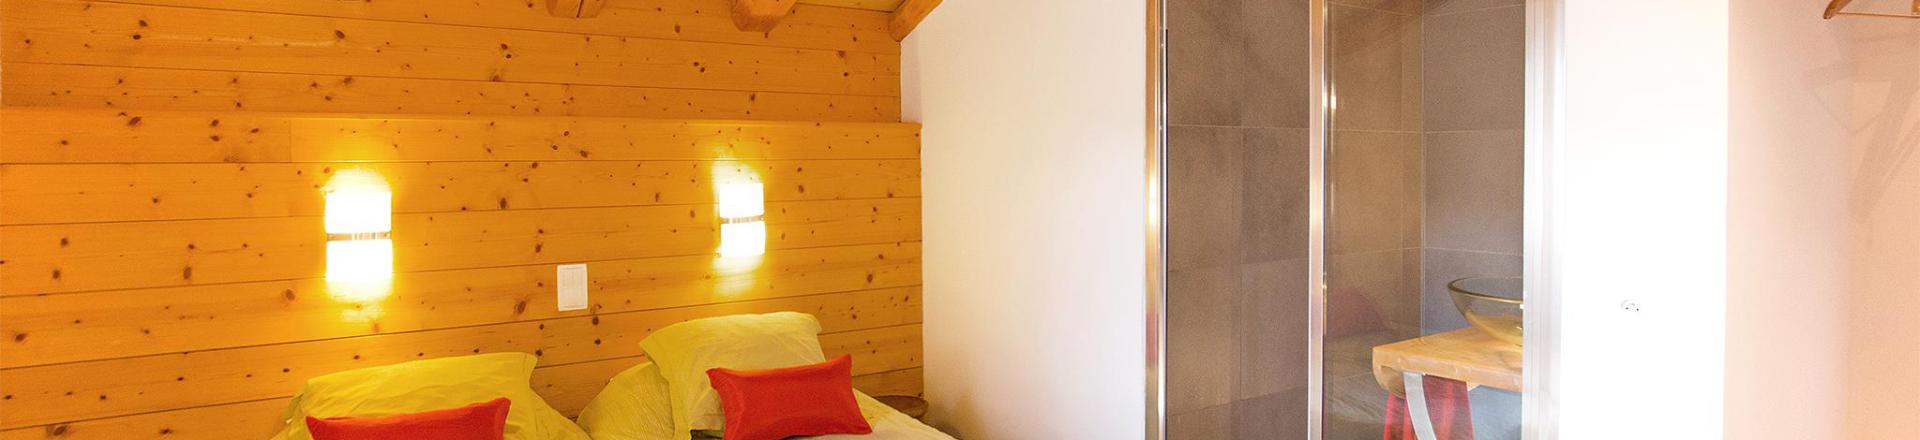 Rent in ski resort Chalet des Arcs CED01 - Les Arcs - Twin beds